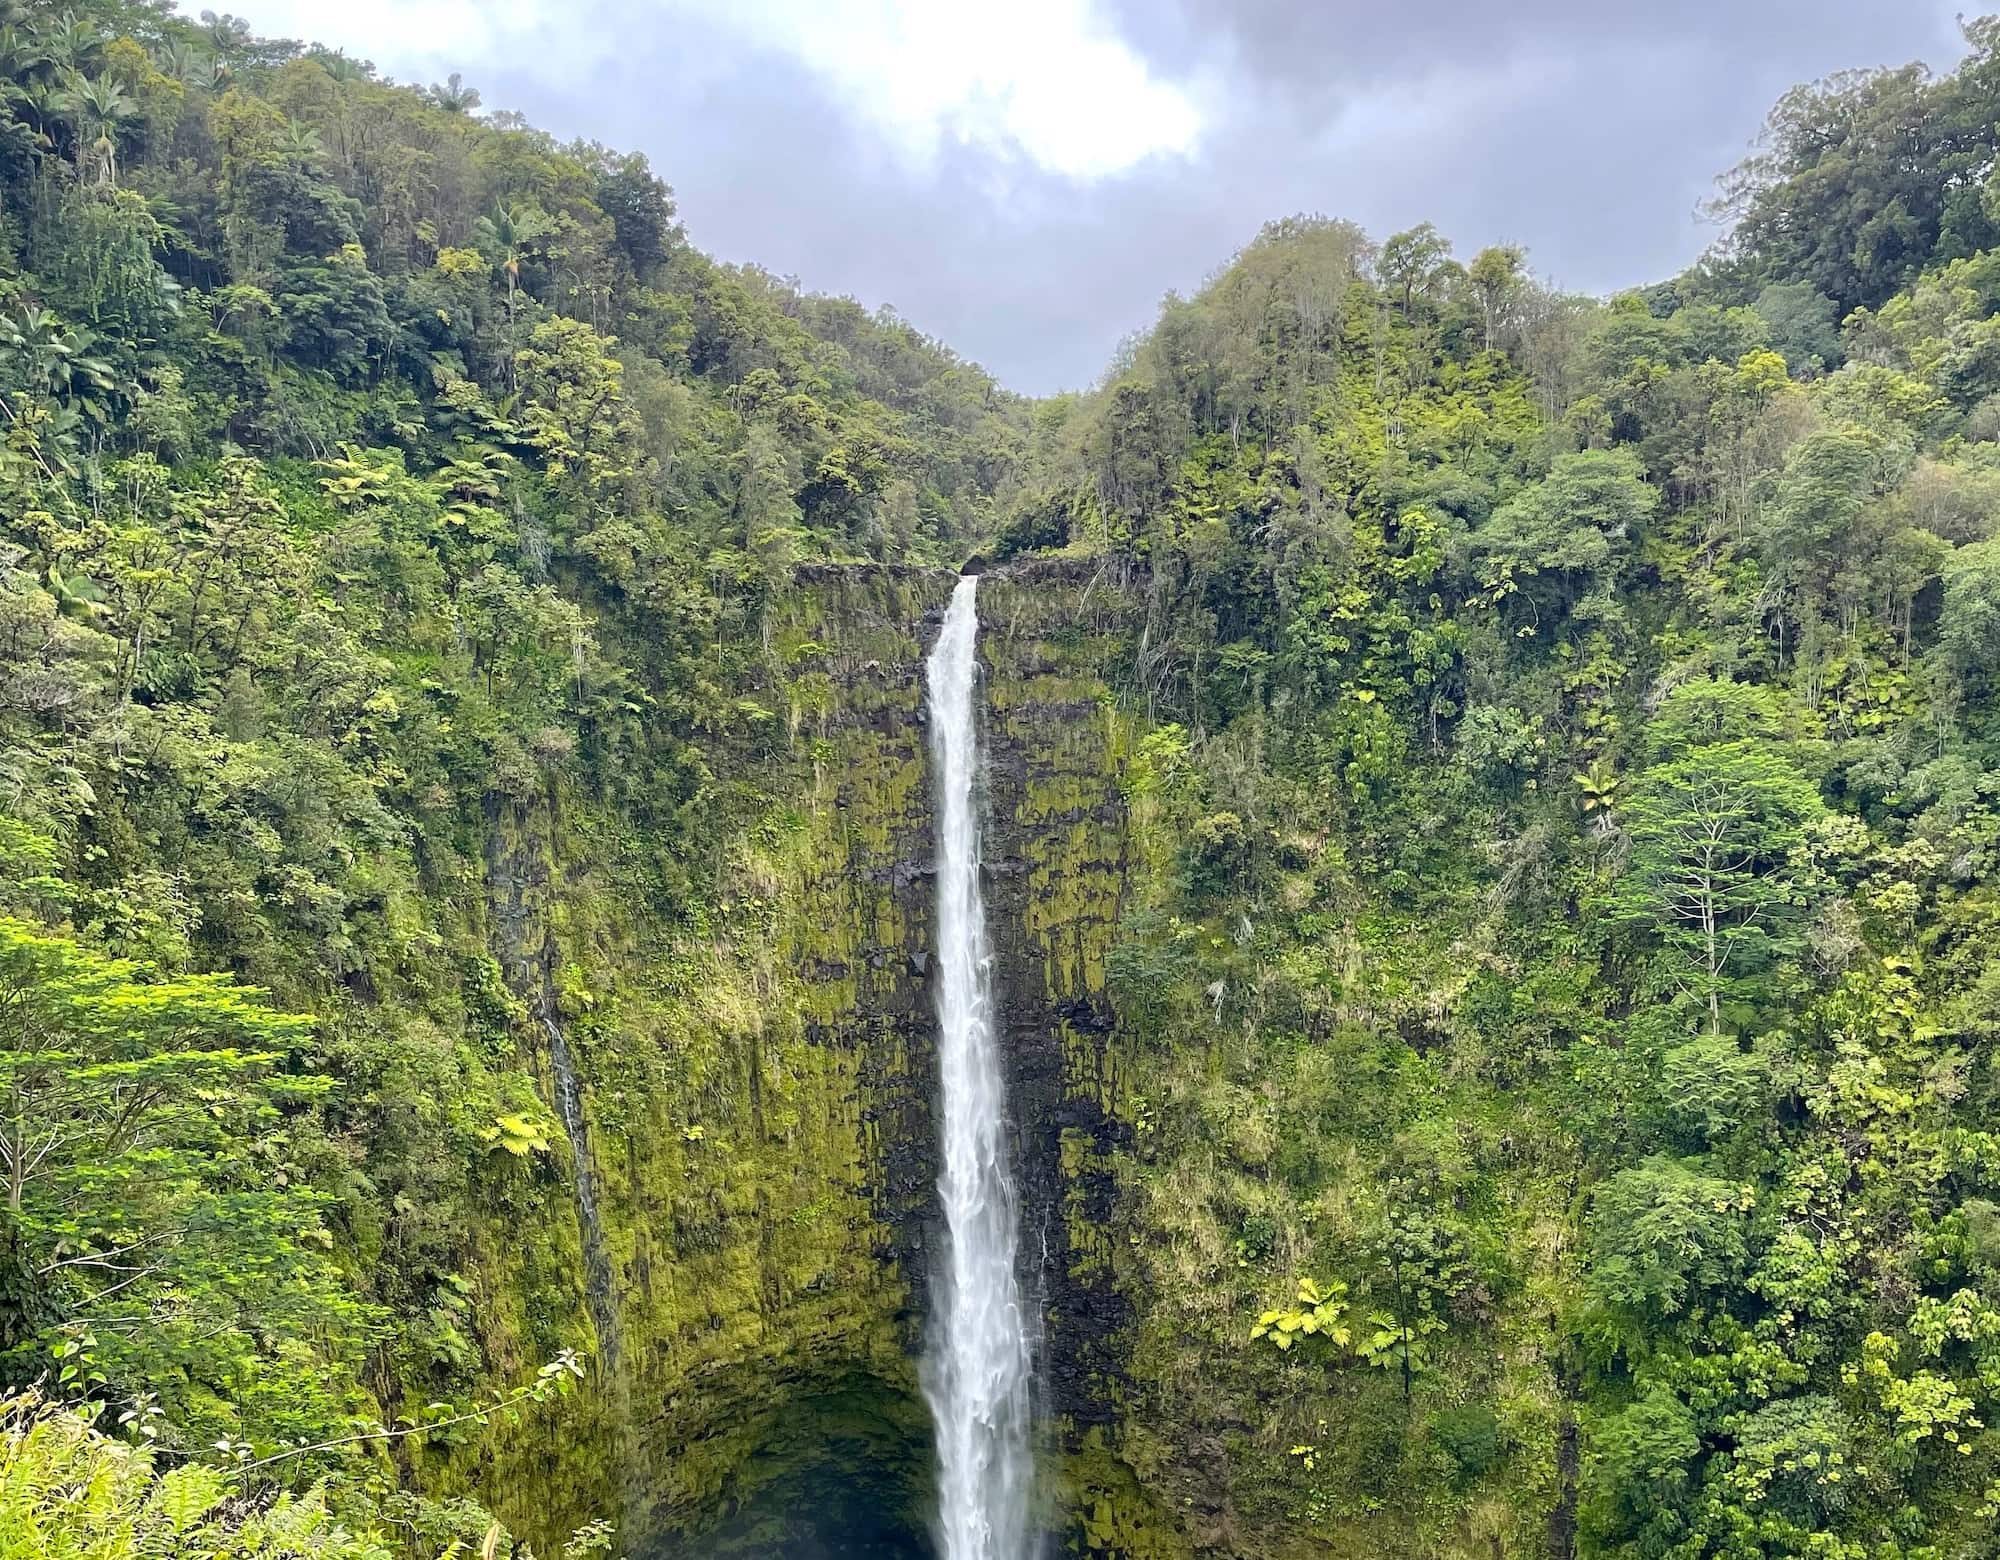 The majestic Akaka Falls on Hawaii's Big Island